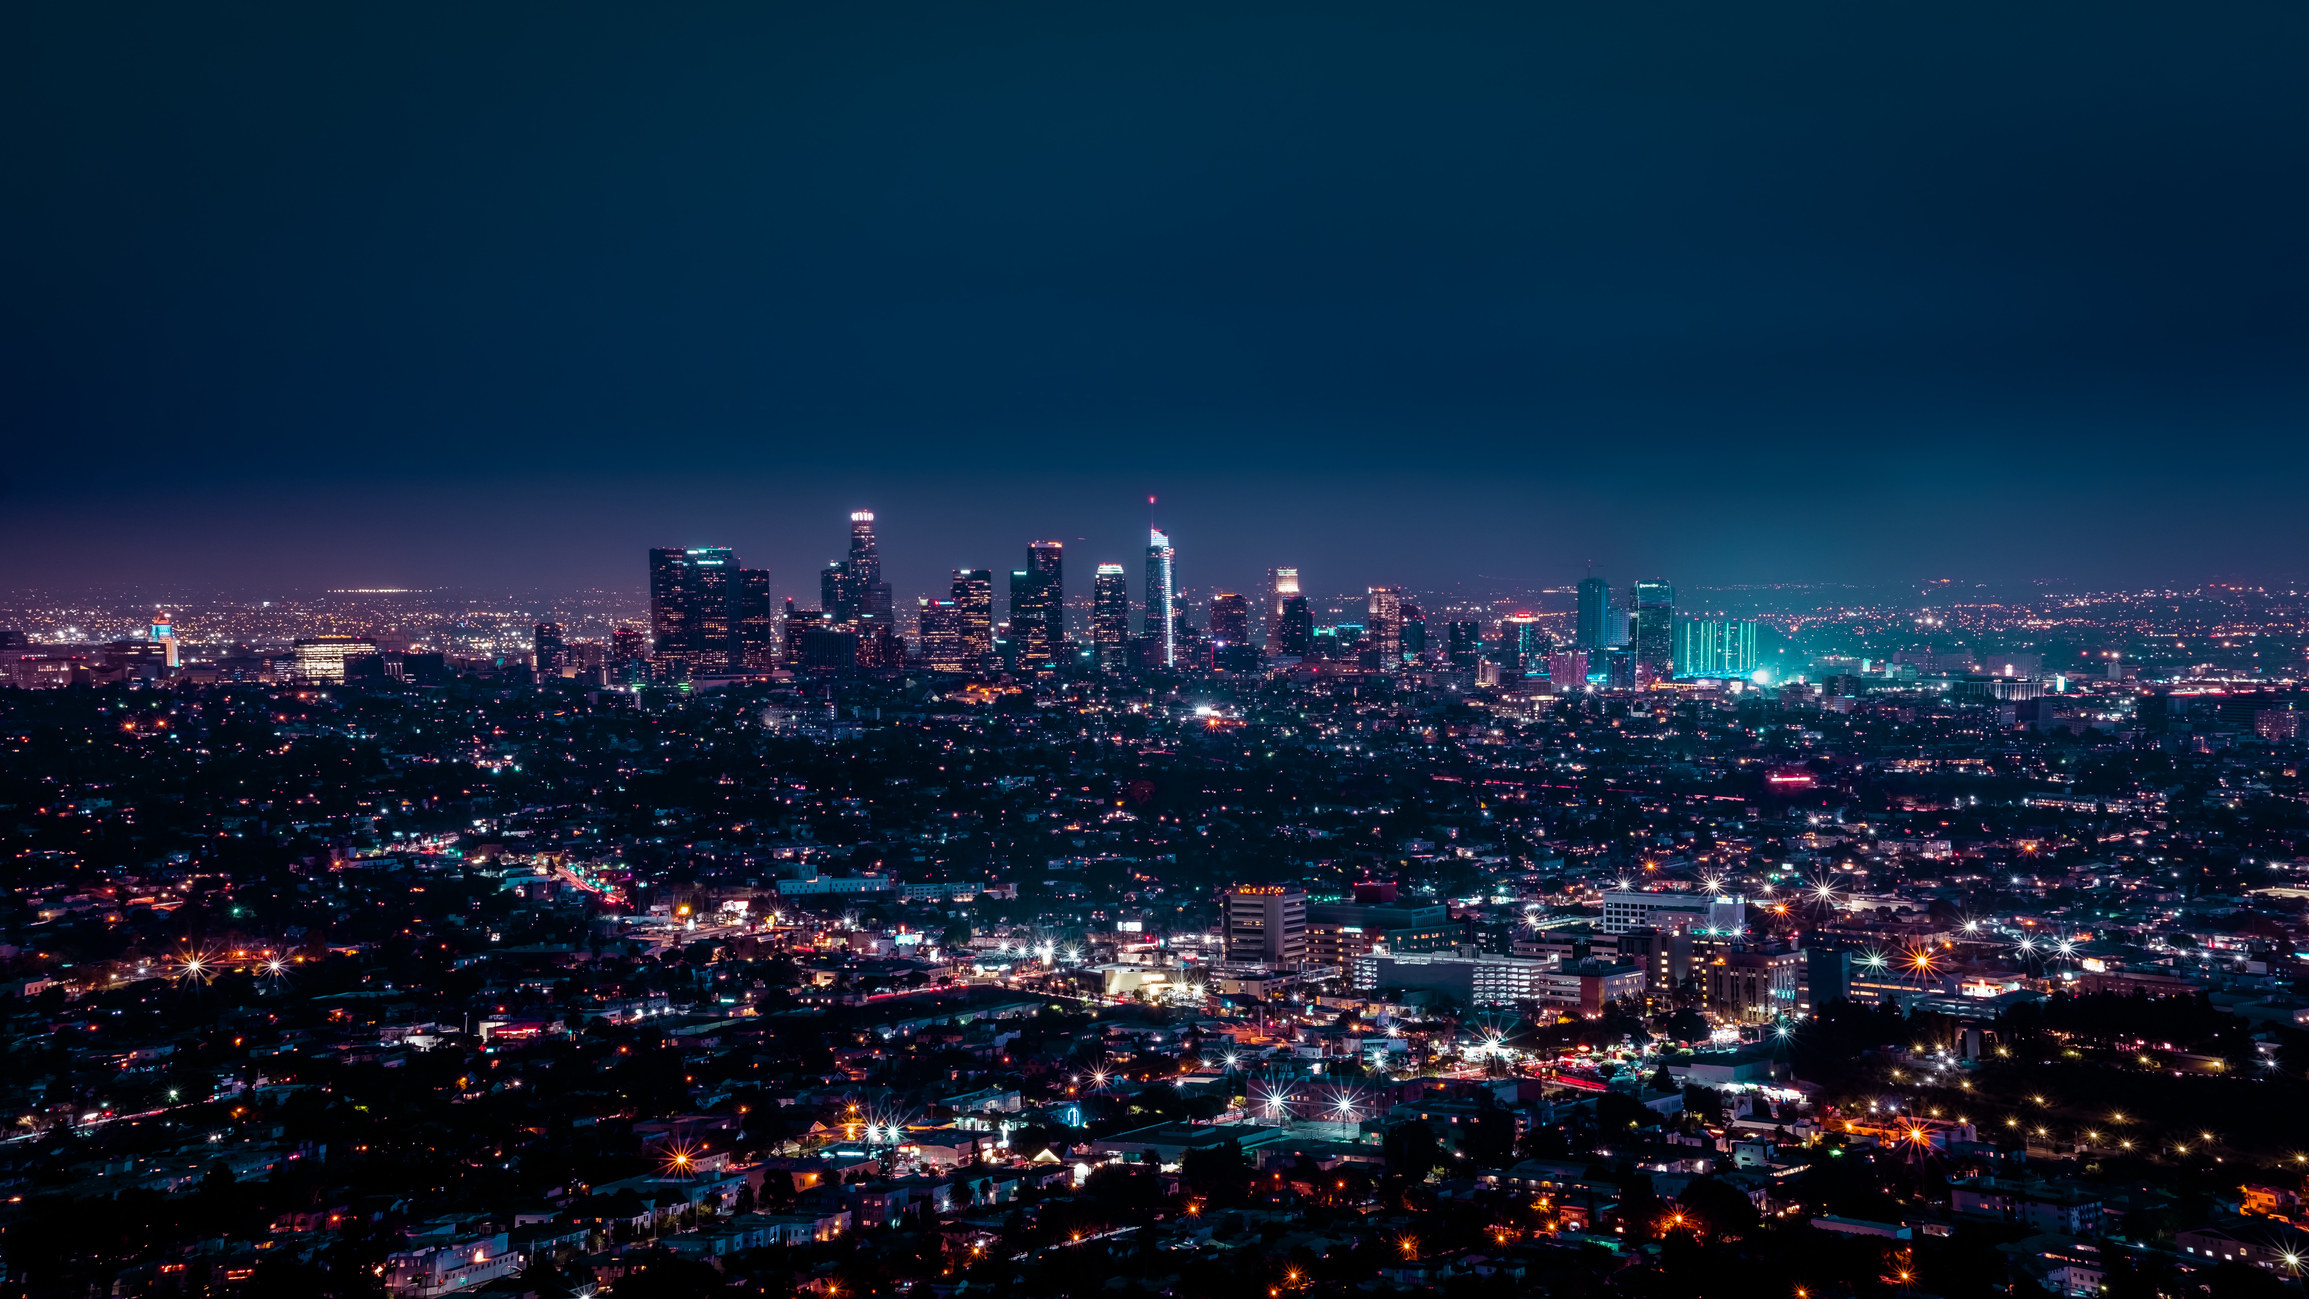 The LA city skyline at night